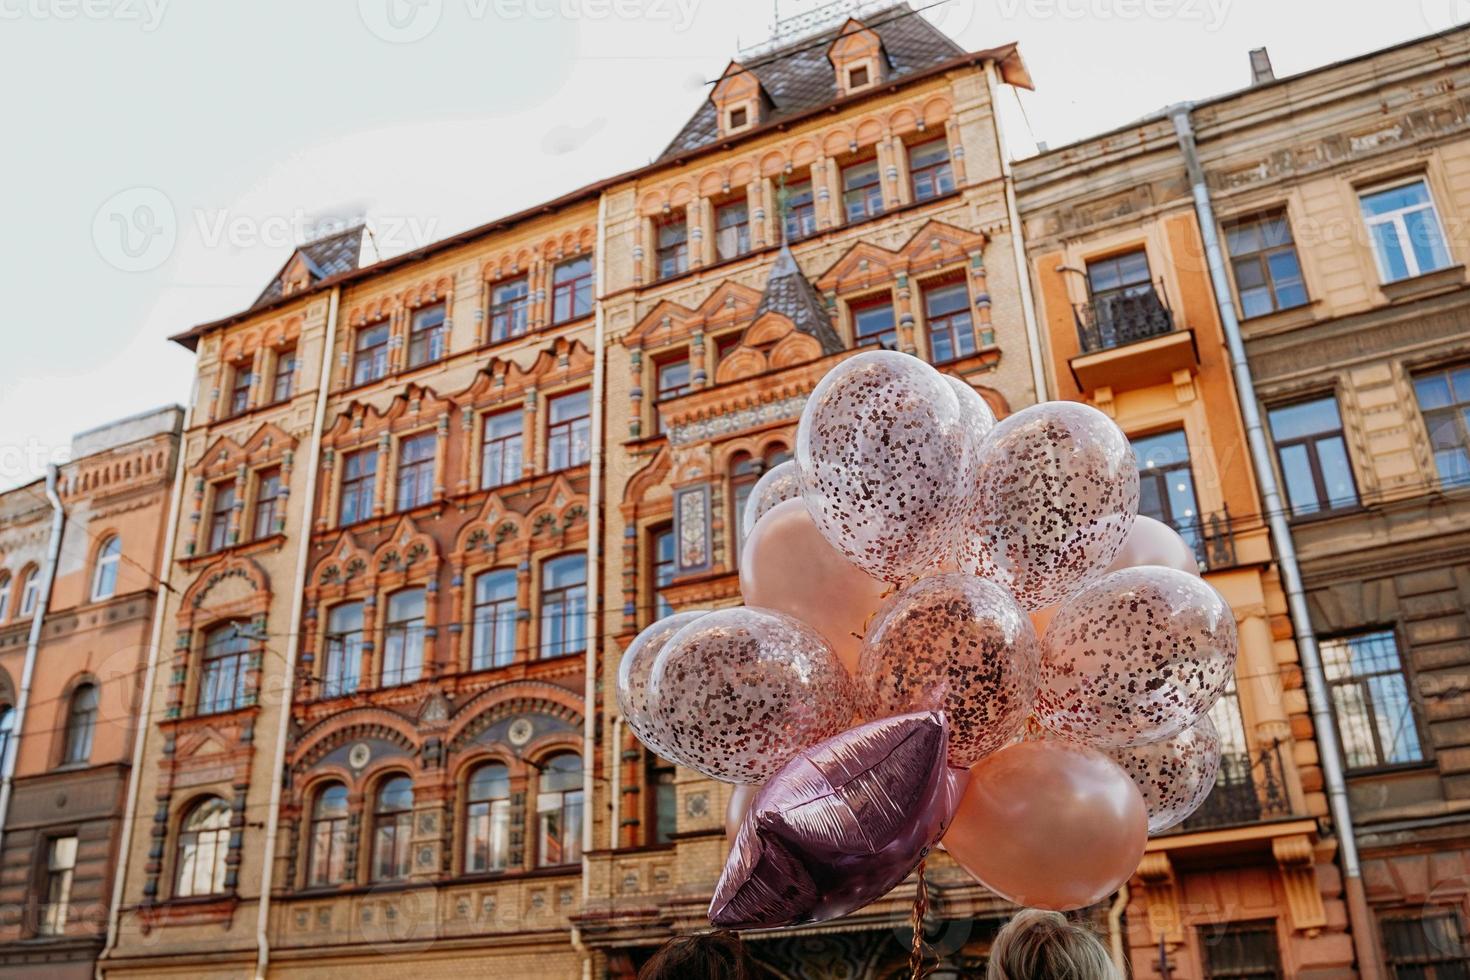 Altes Backsteinhaus und Ballons, St. Petersburg, Russland. 19. September 2021 foto